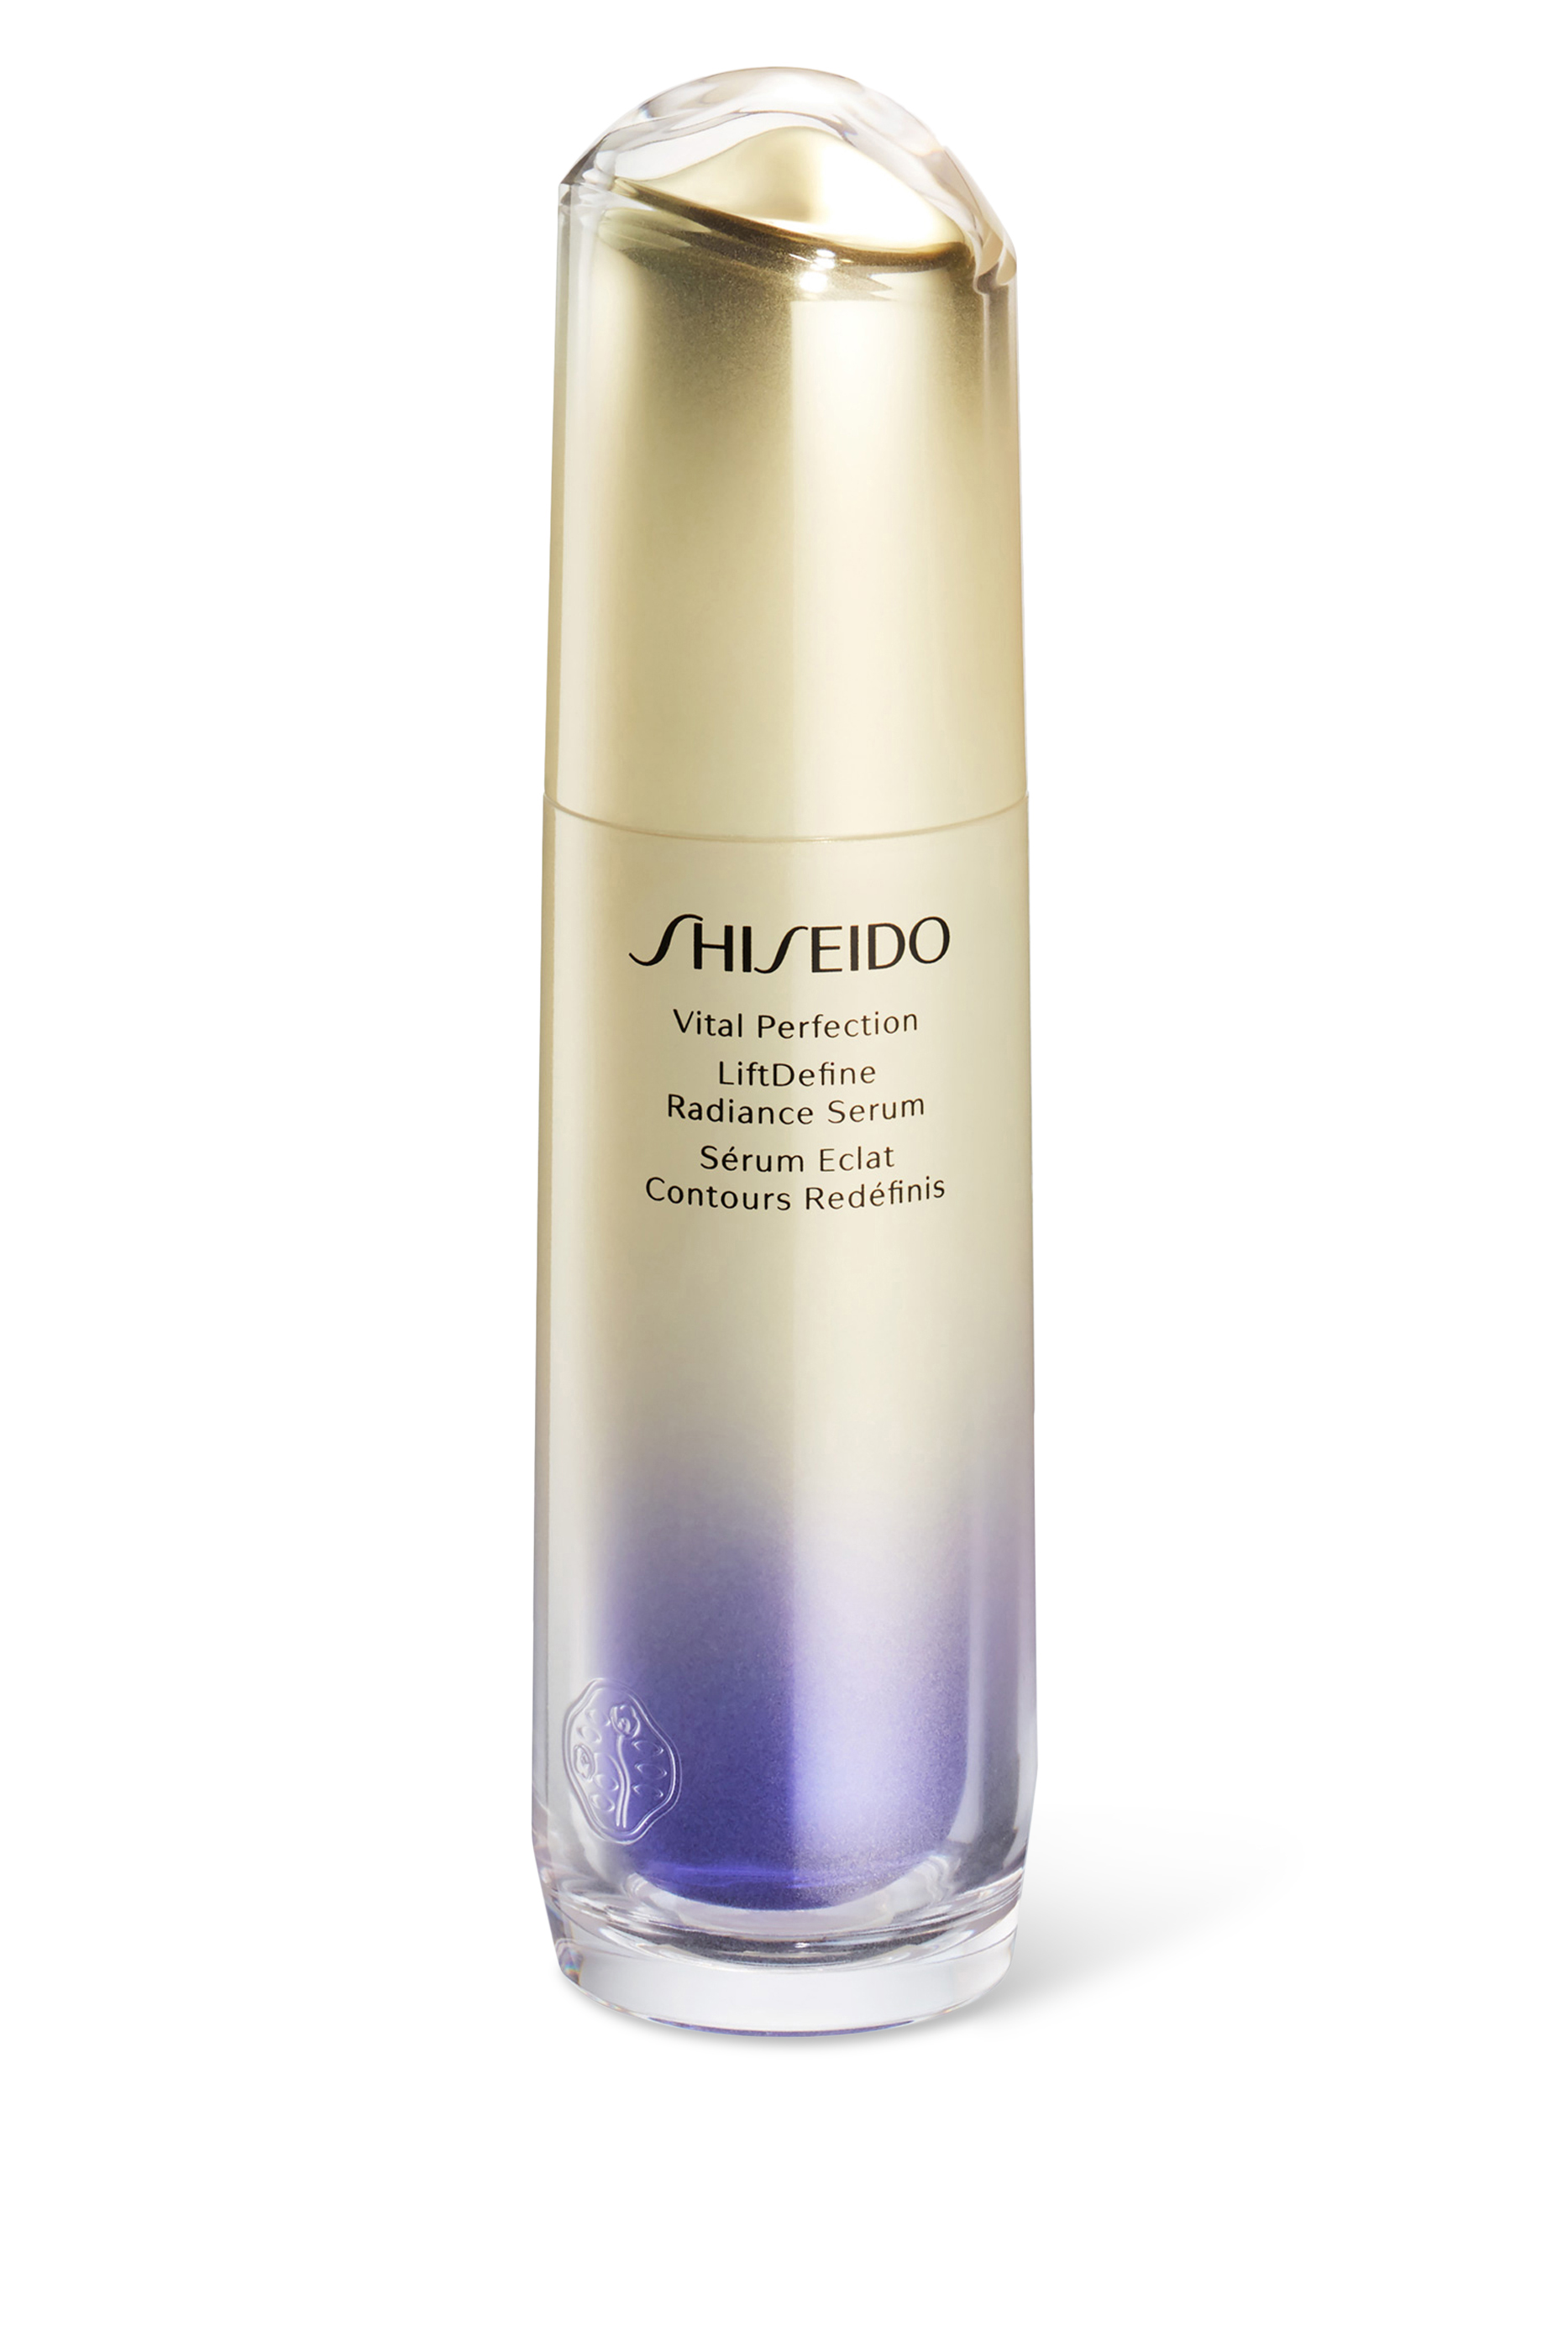 Shiseido сыворотка. Шисейдо Витал Перфекшн. Сыворотка шисейдо. Шисейдо сыворотка для лица. Shiseido моделирующая сыворотка для лифтинга и сияния кожи Vital perfection.